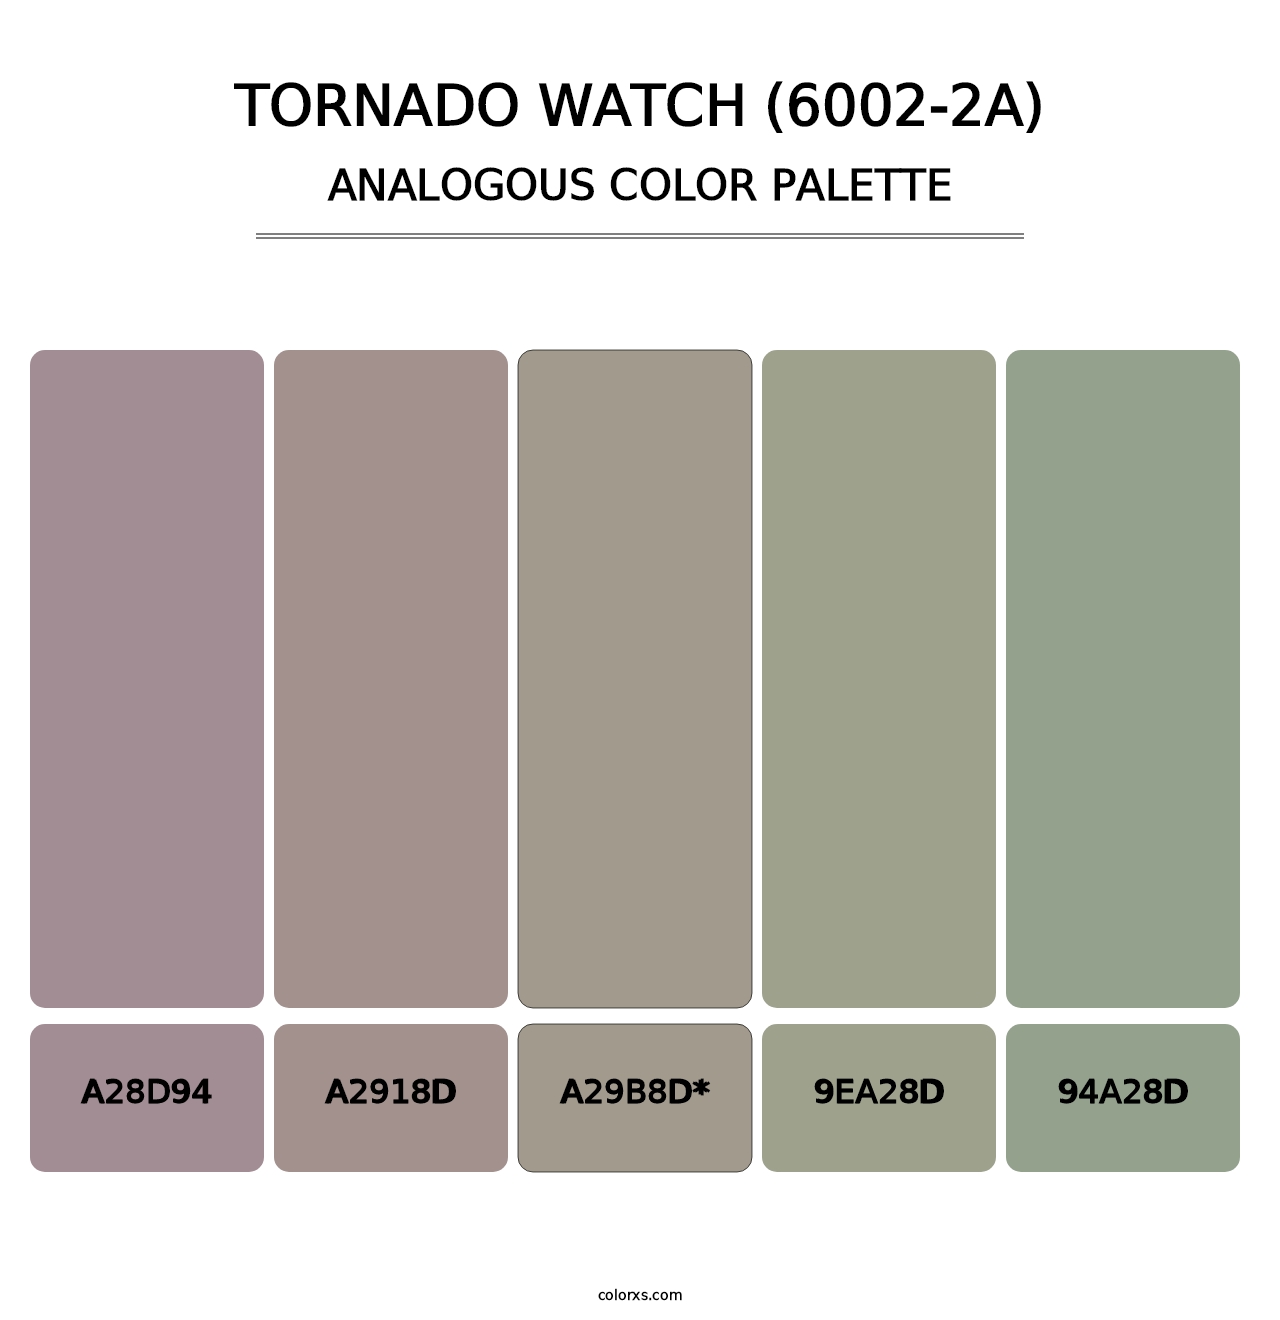 Tornado Watch (6002-2A) - Analogous Color Palette